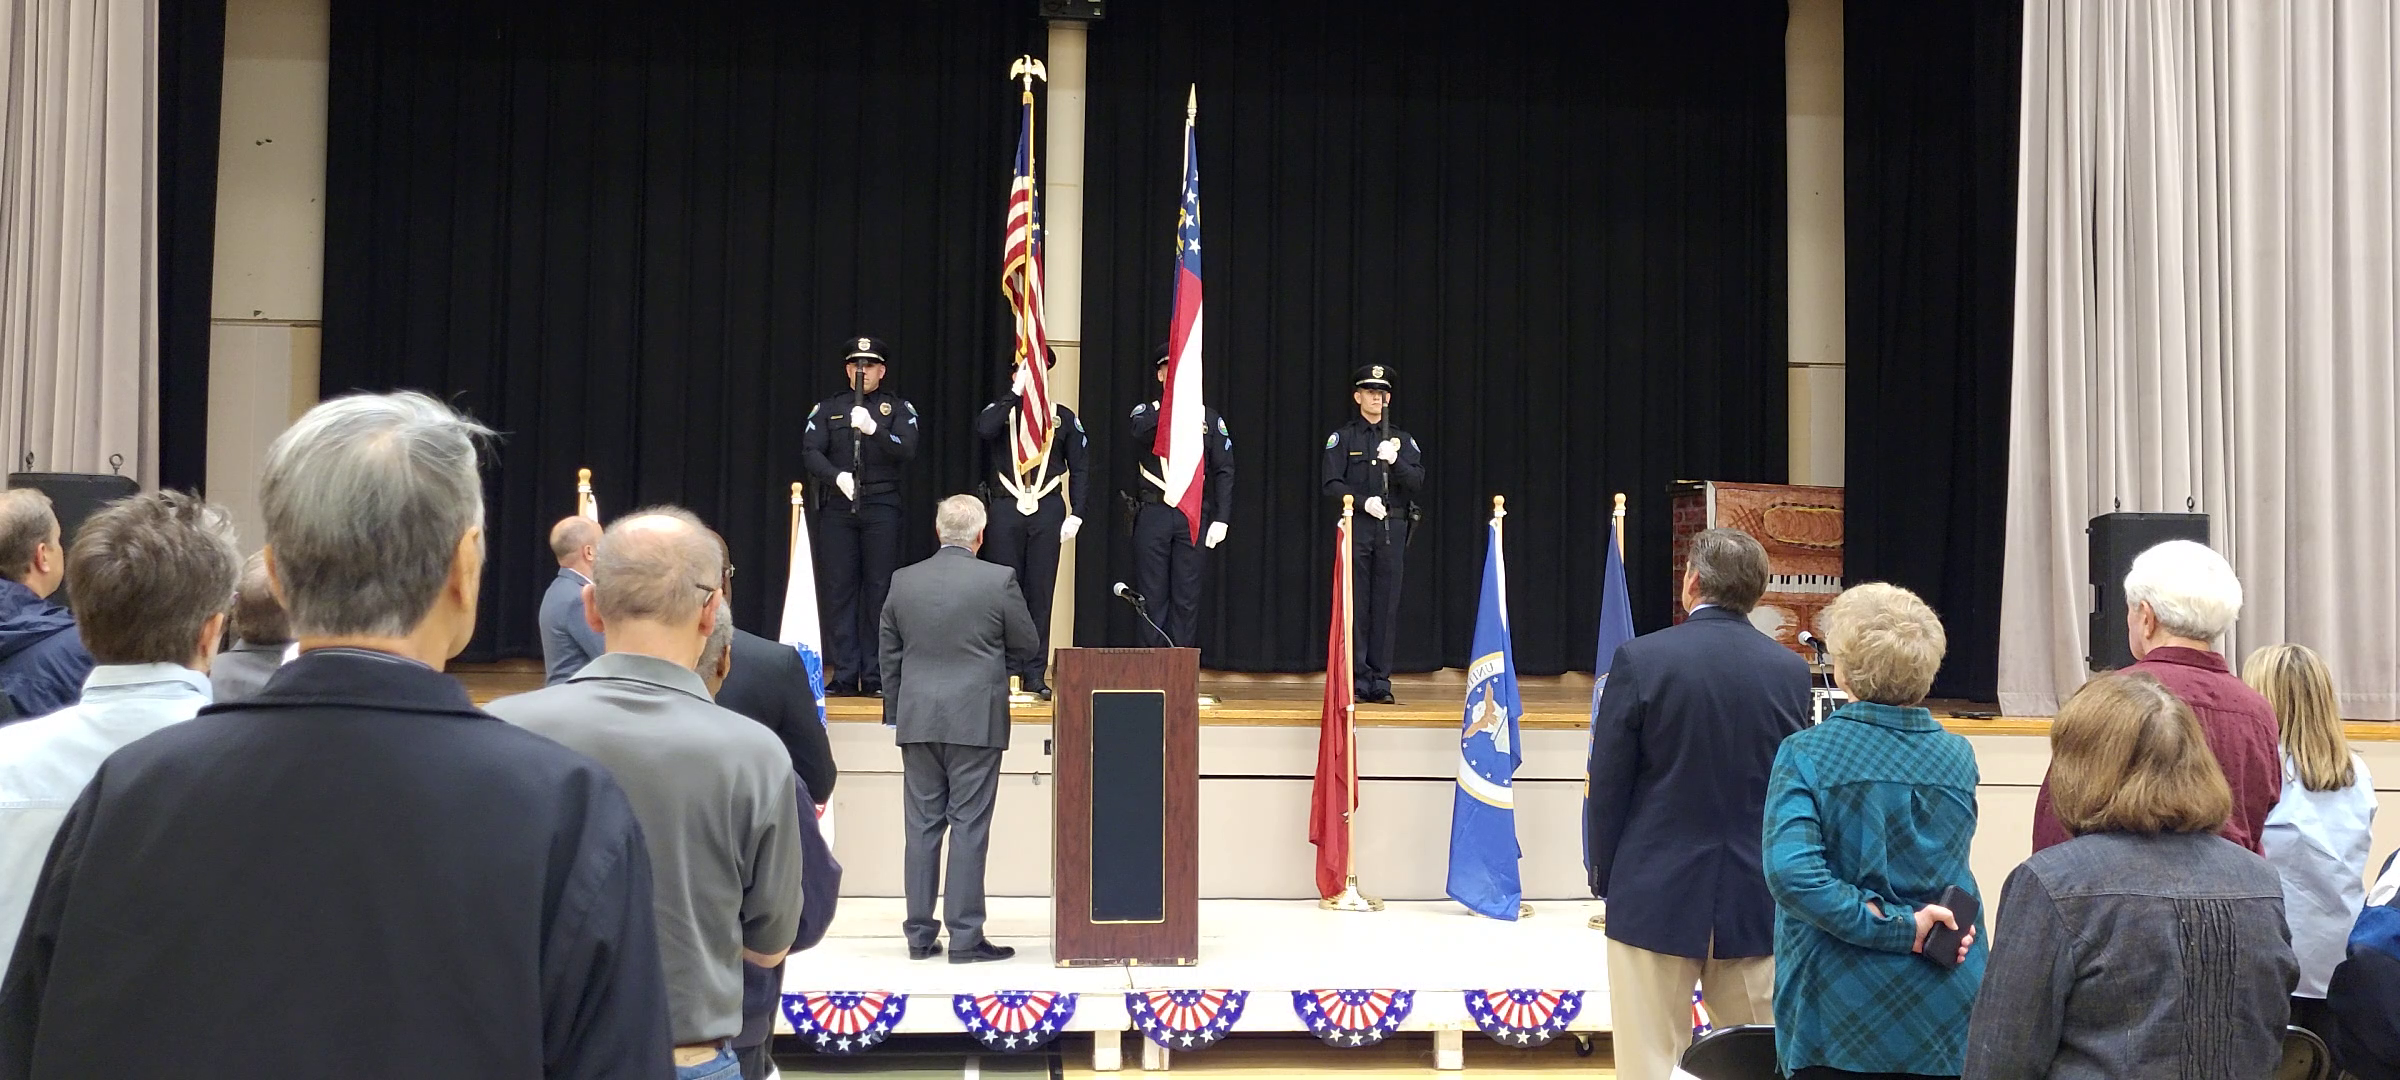 Roswell Veterans Day Ceremony Set for Saturday November 11